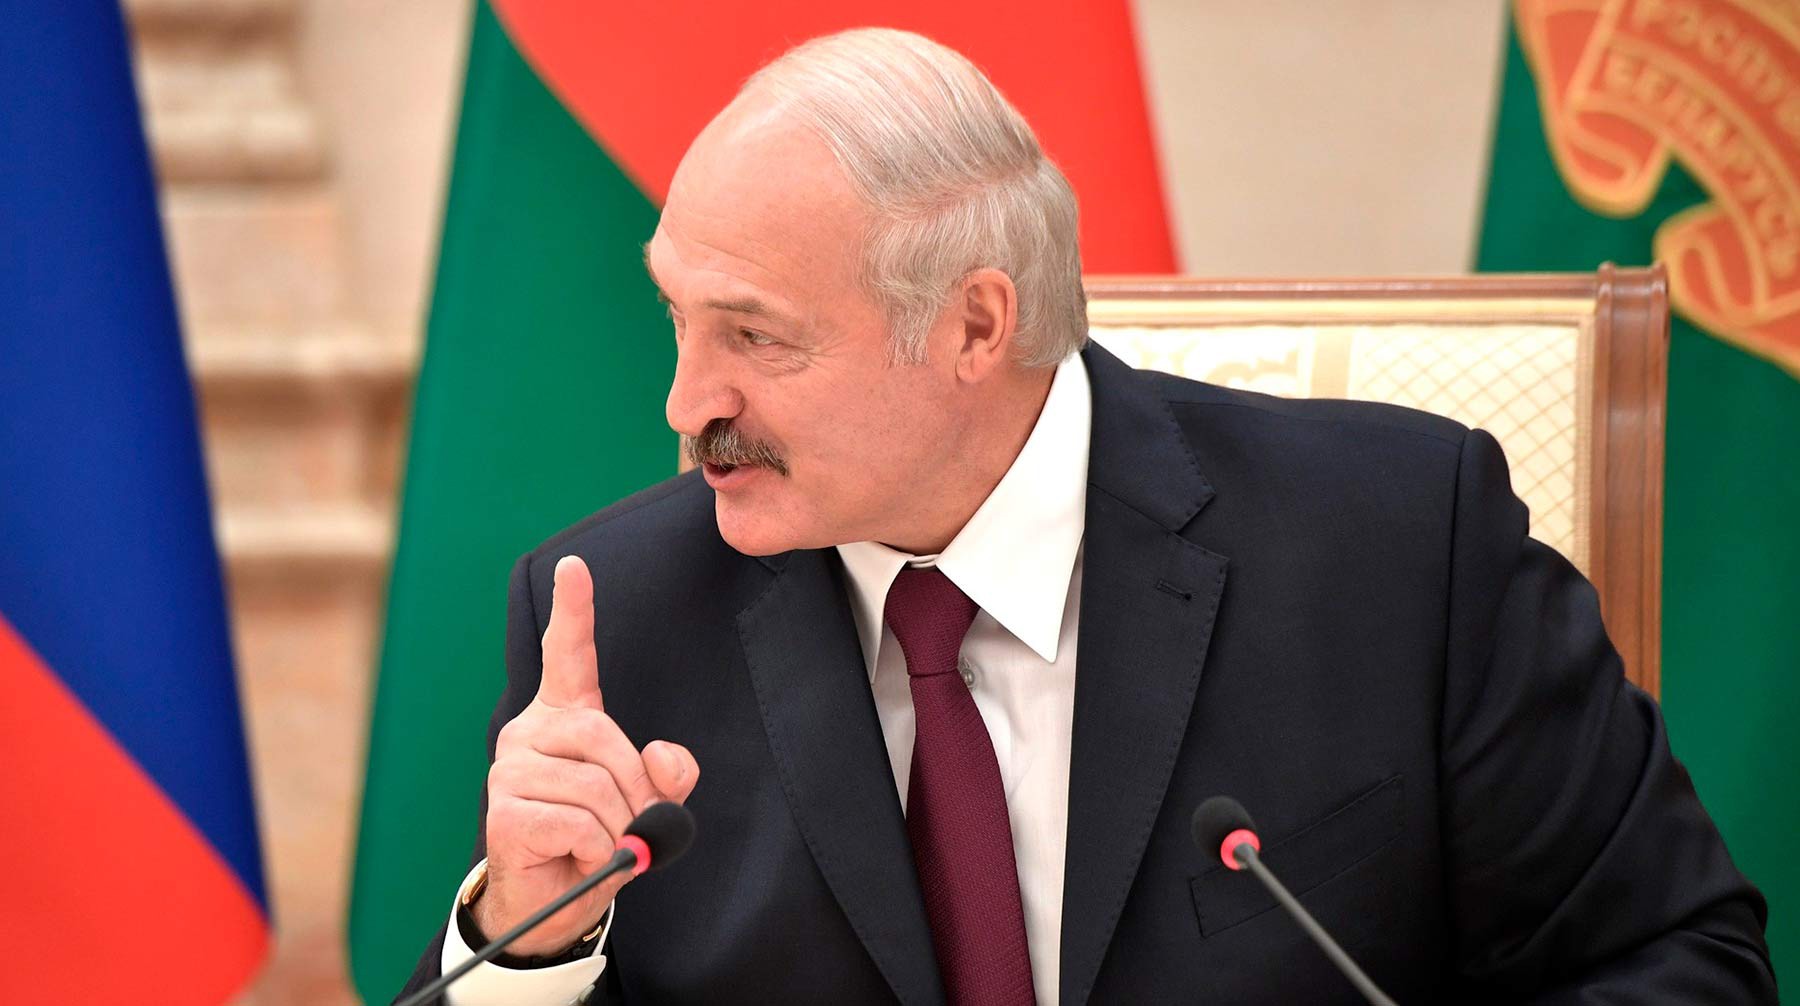 Dailystorm - Надо рюмочку, а не полведра: Лукашенко рассмешил зал, пошутив про коронавирус